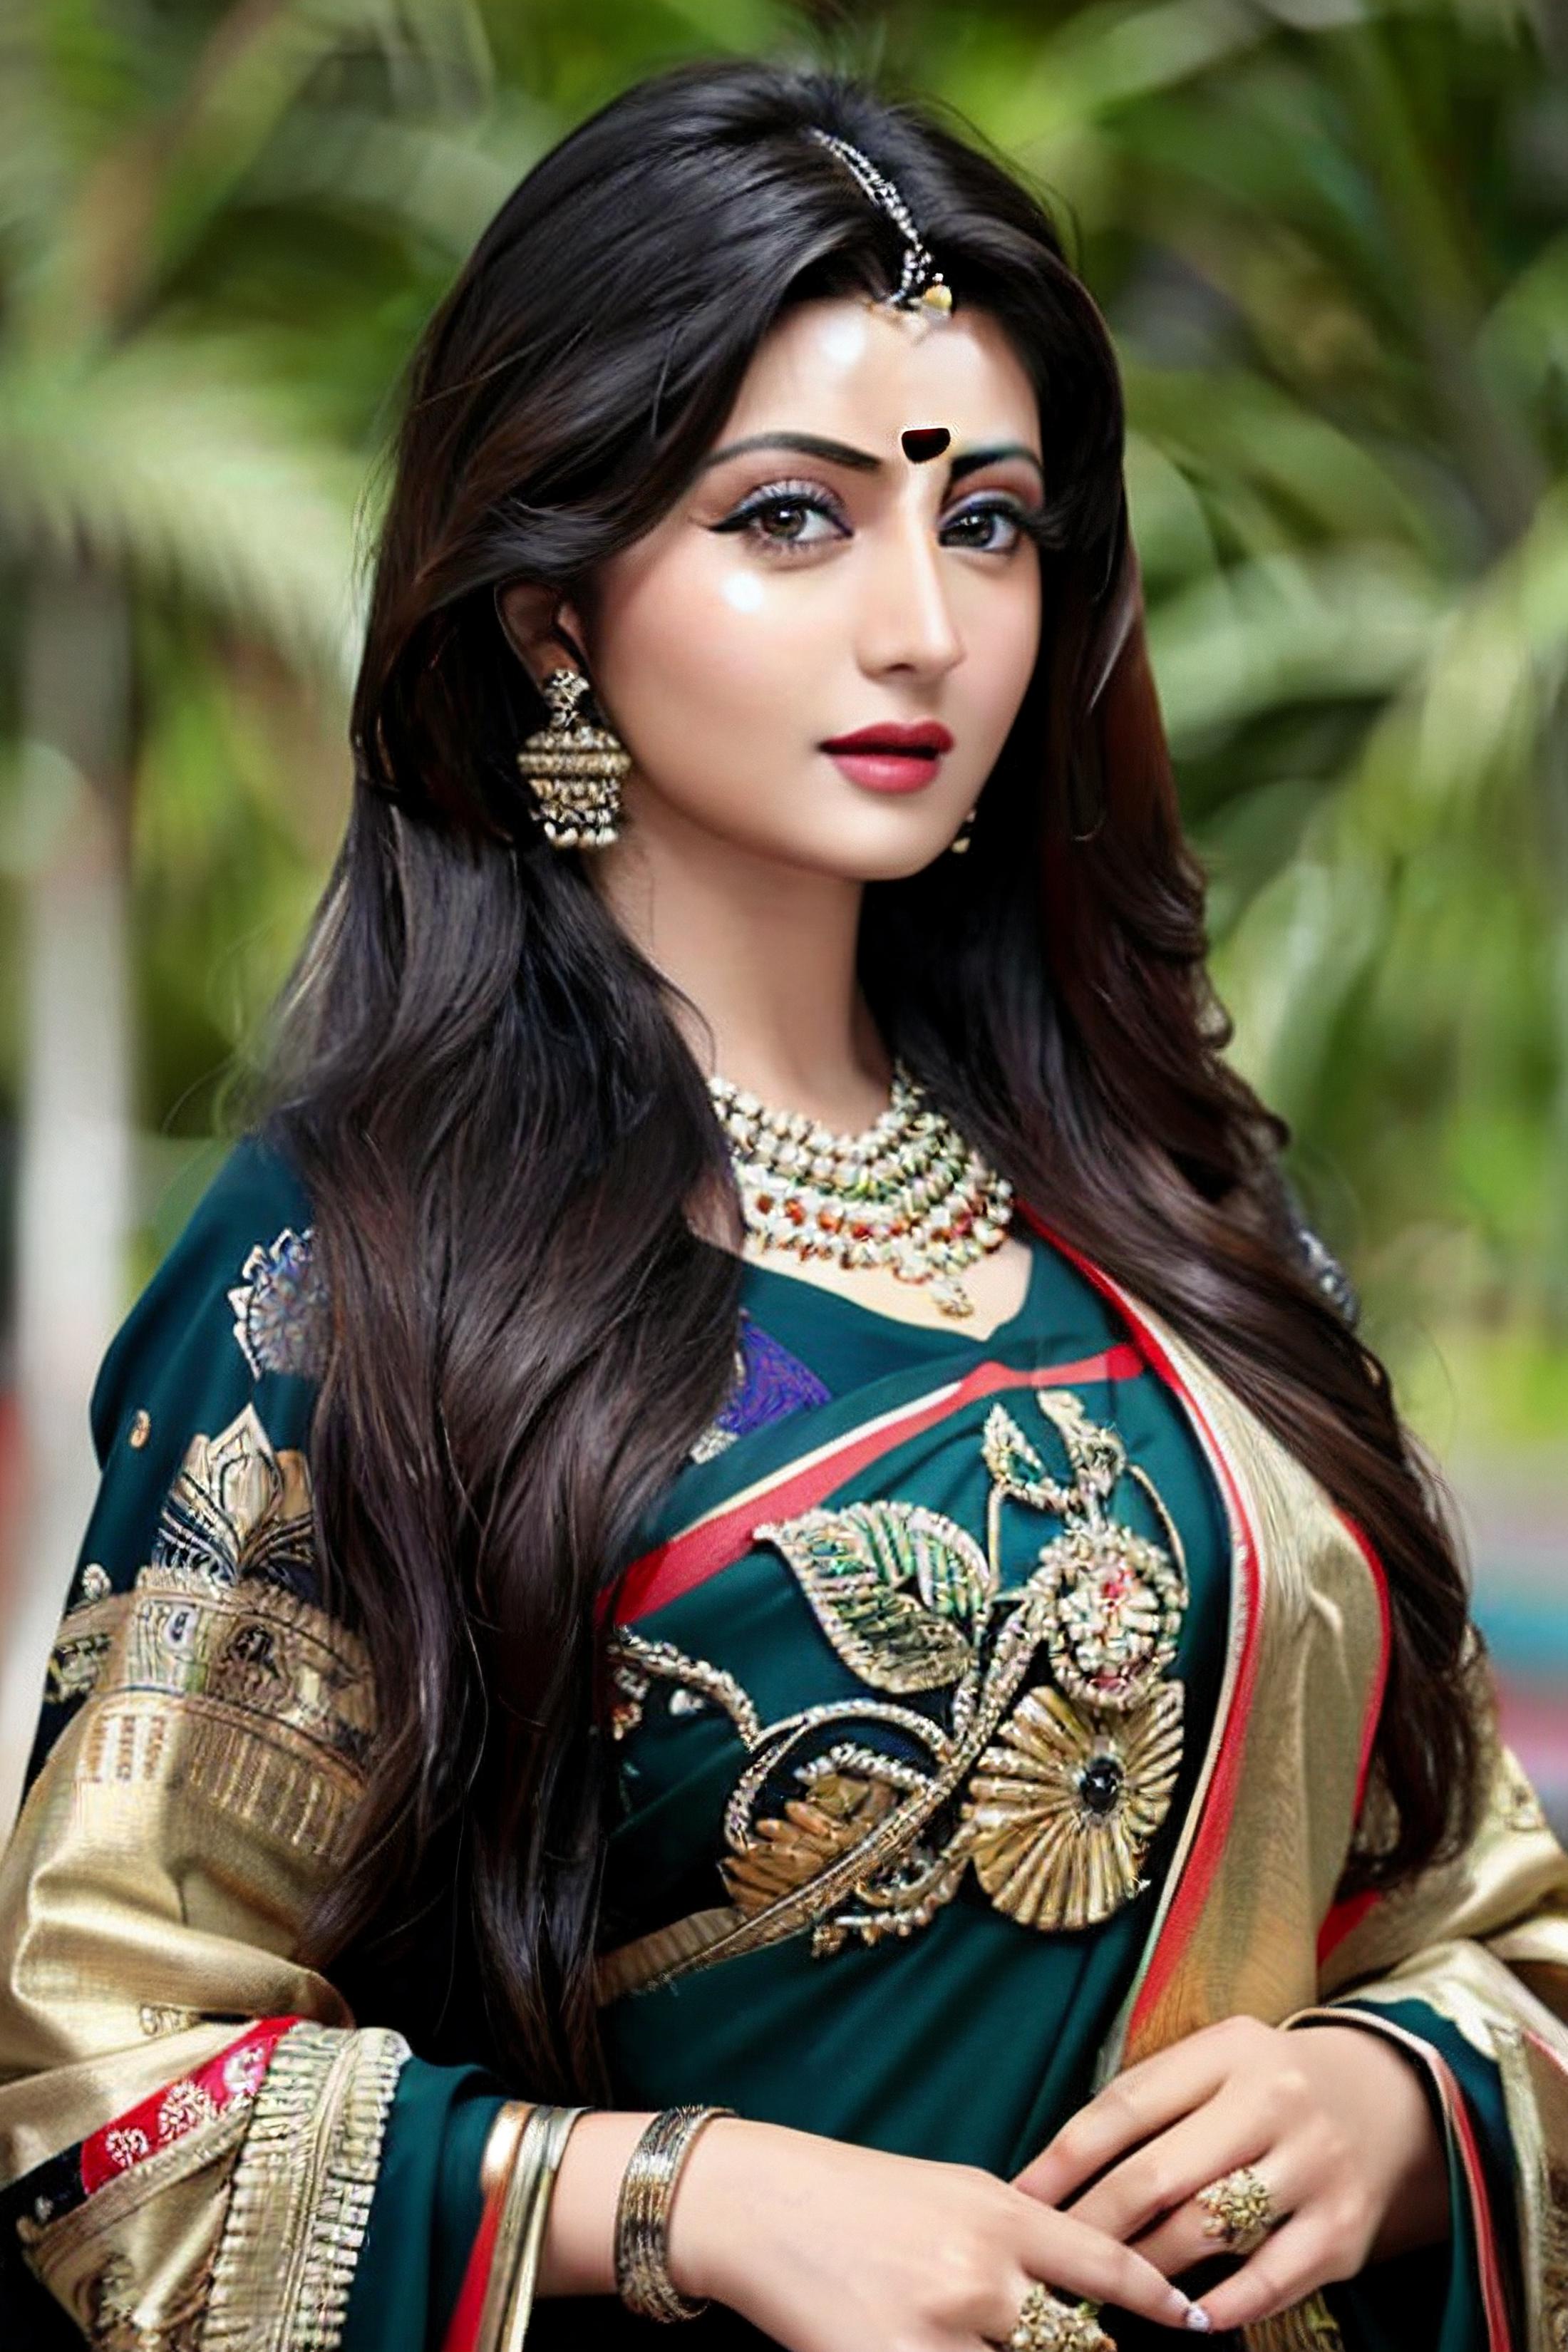 Pori Moni - Actress - Model - Indian image by sayurio